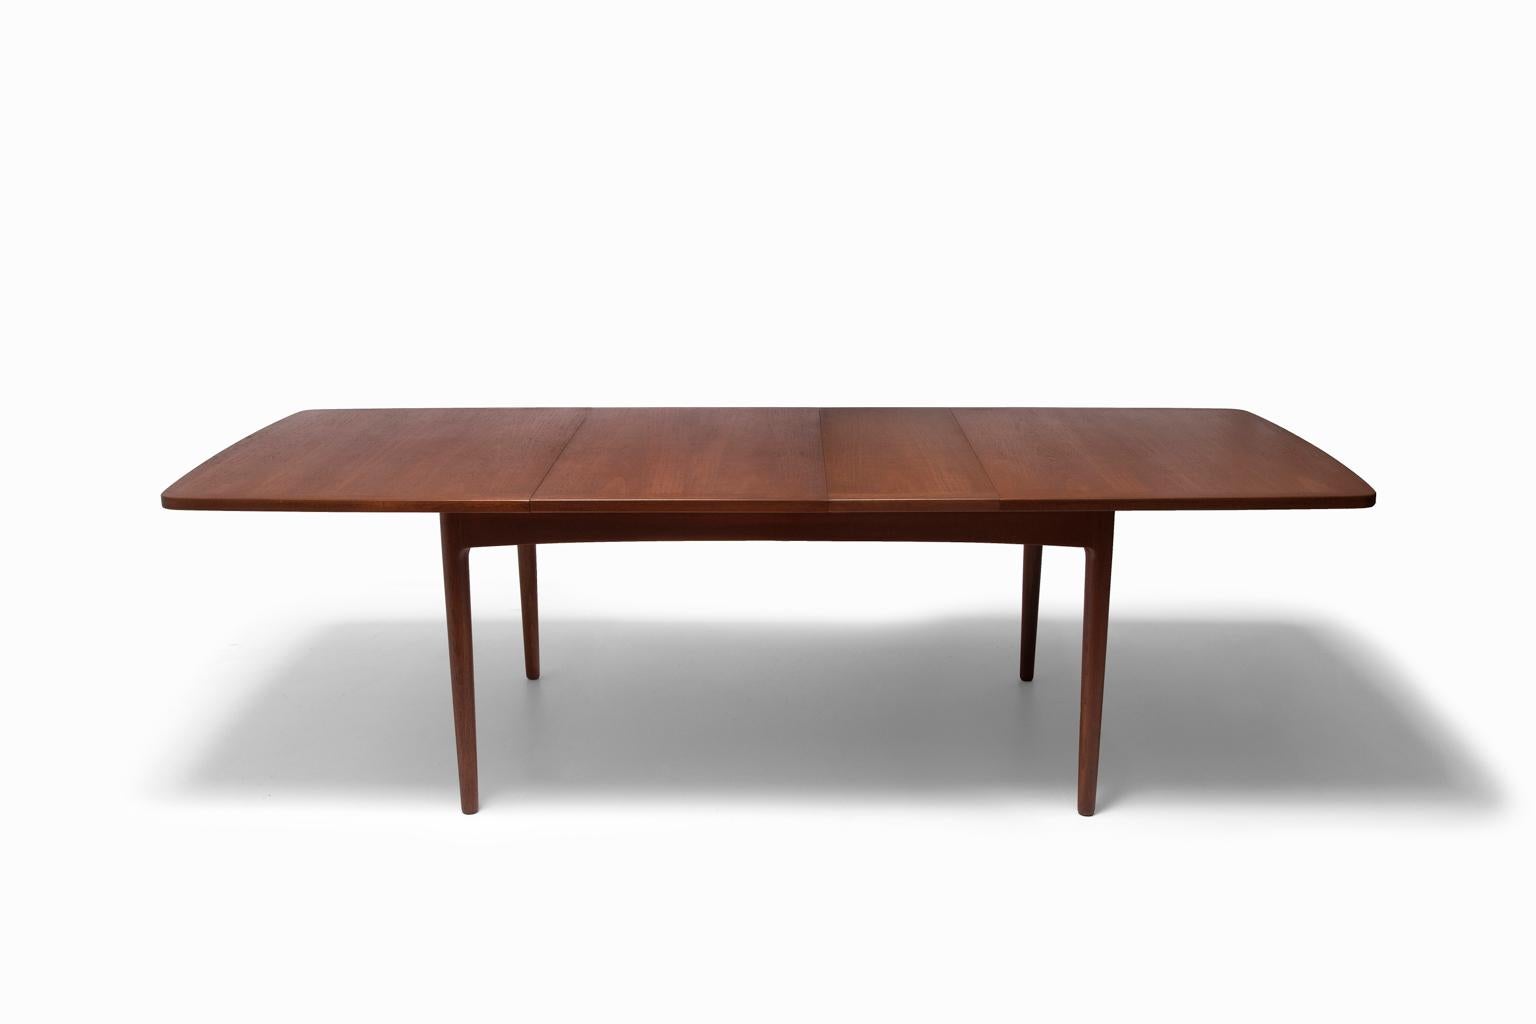 Henrik Worts Erik Worts Danish Mid-Century Modern Mahogany Table & Chairs For Sale 1